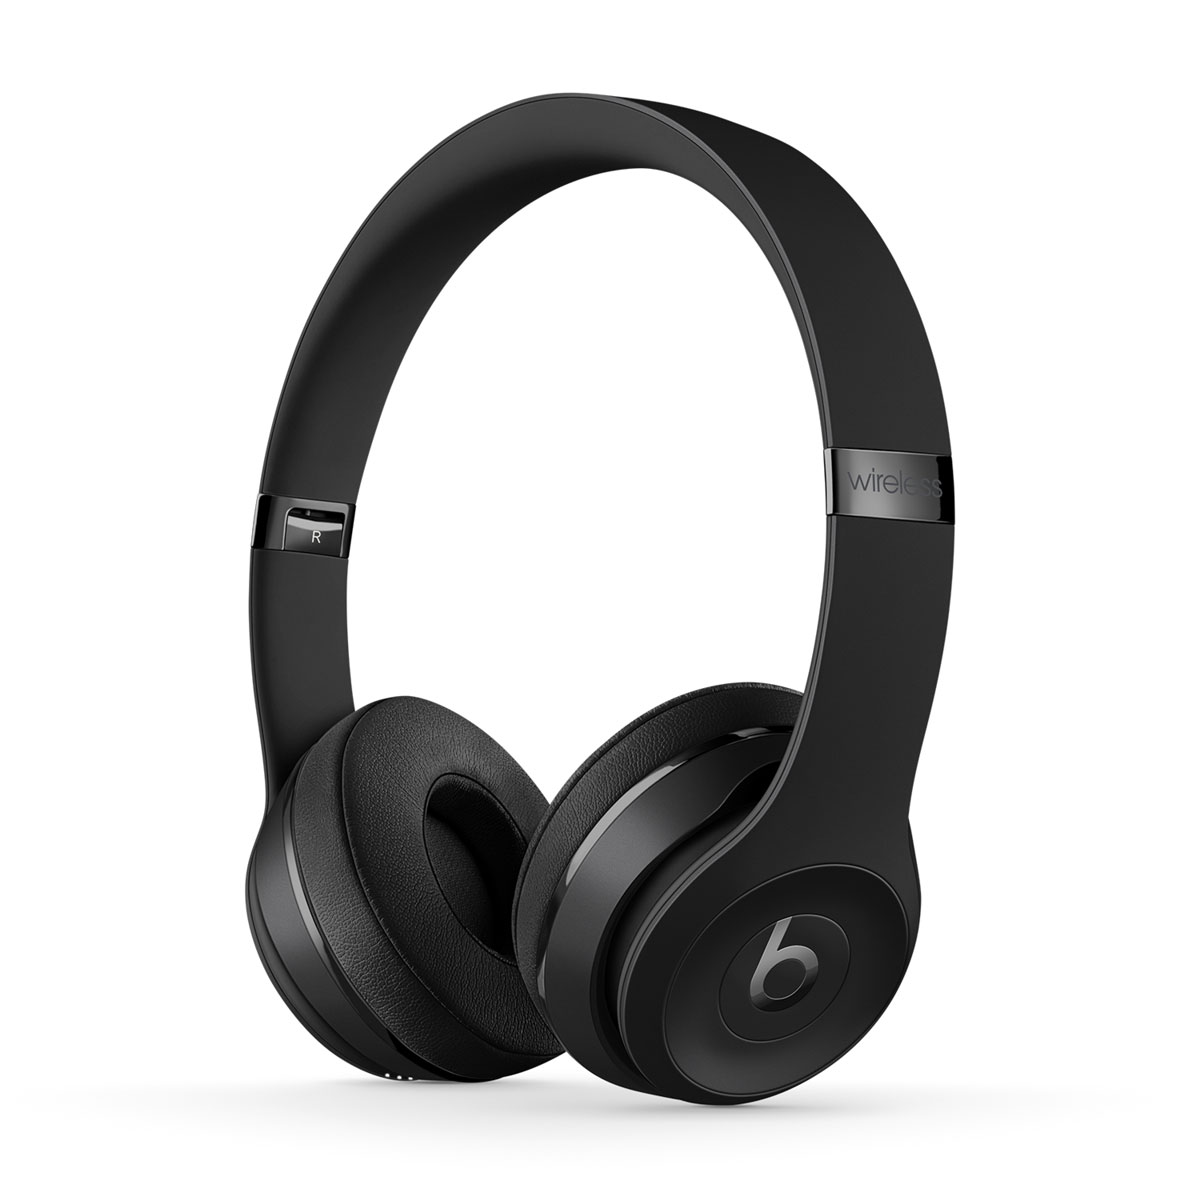 Beats Solo3 Wireless Headphones - Black 